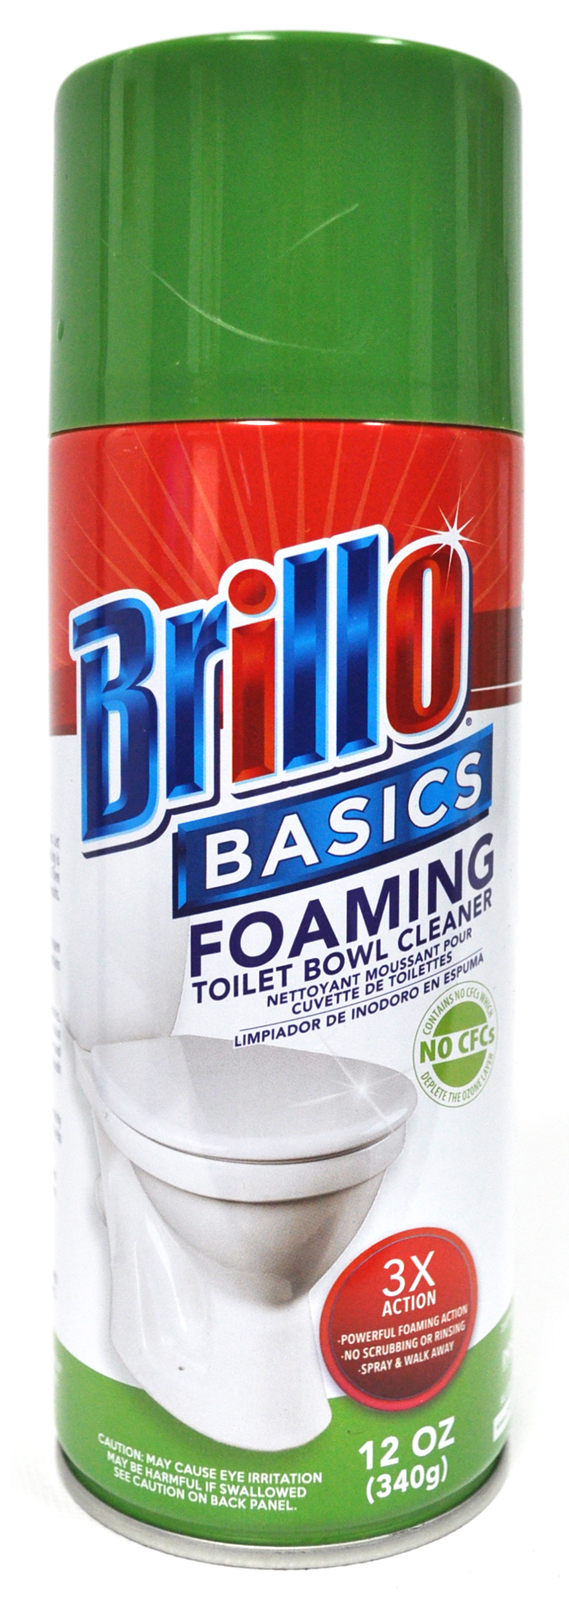 Brillo Basics Foaming Toilet Bowl Cleaner 12 Oz